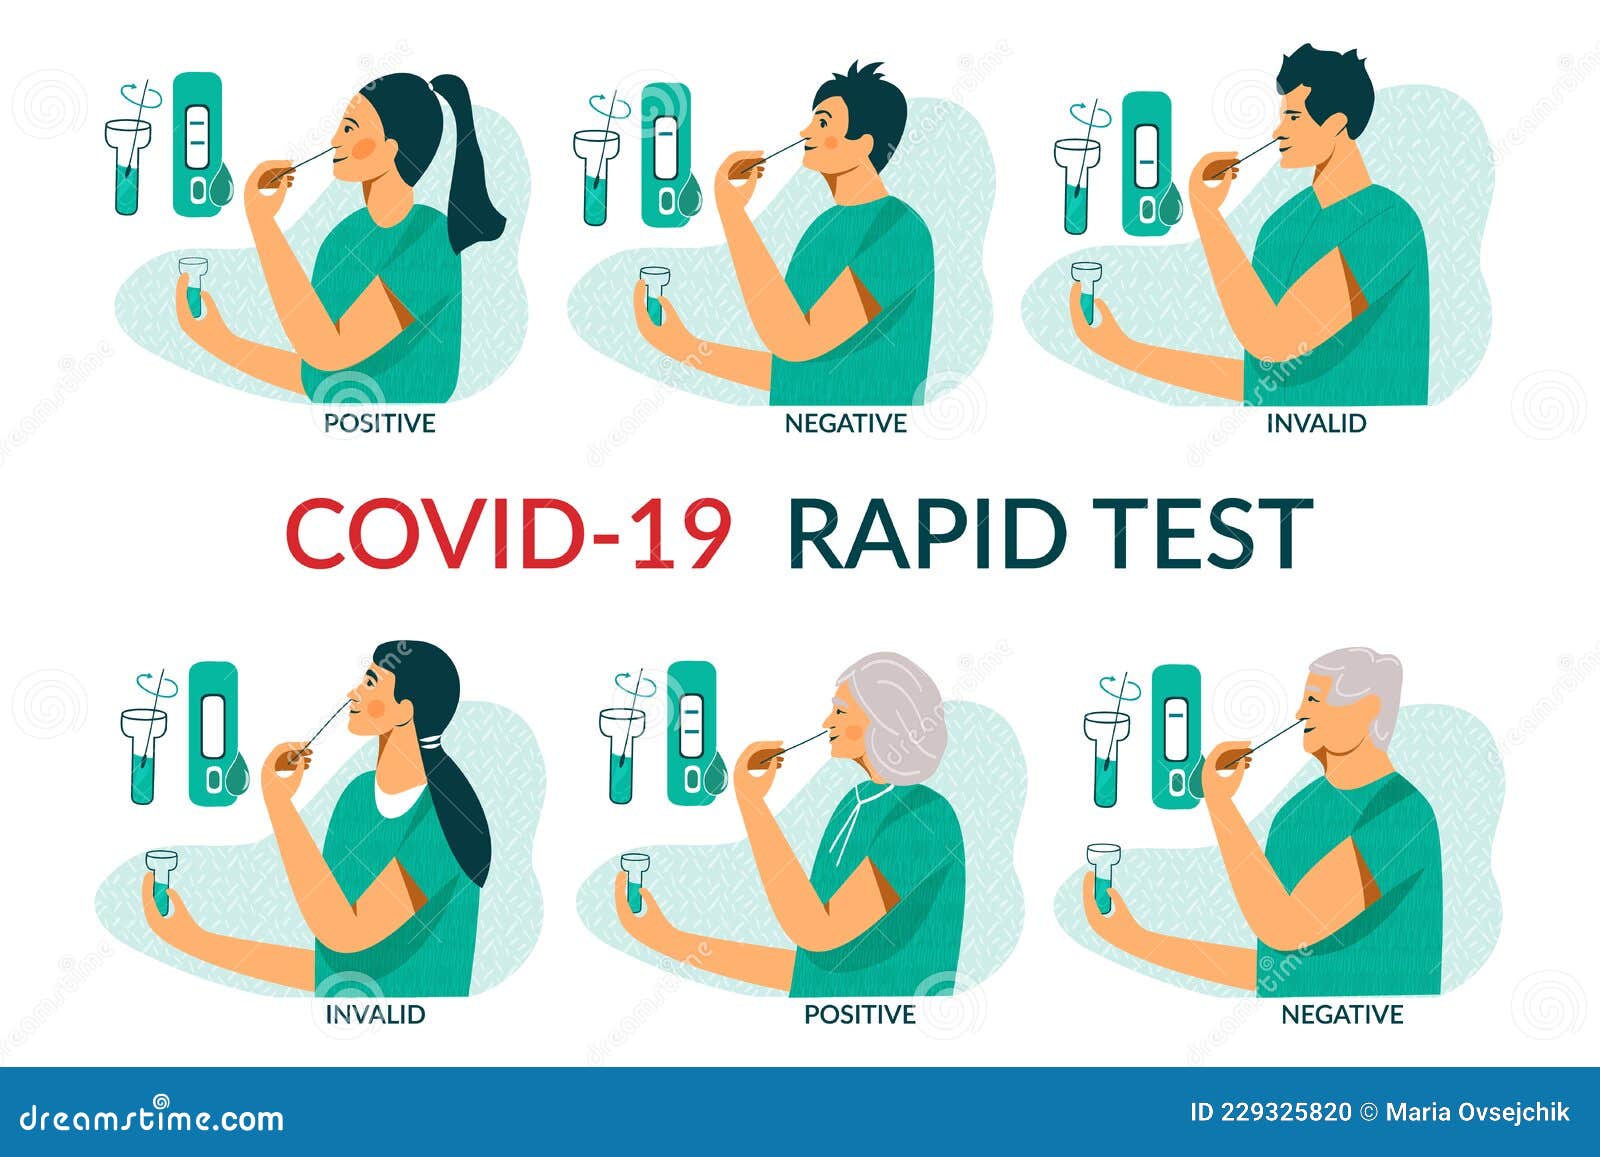 rapid covid-19 antigen testing for adult, elderly and children. corona virus nasal pcr swab rapid test. people themself